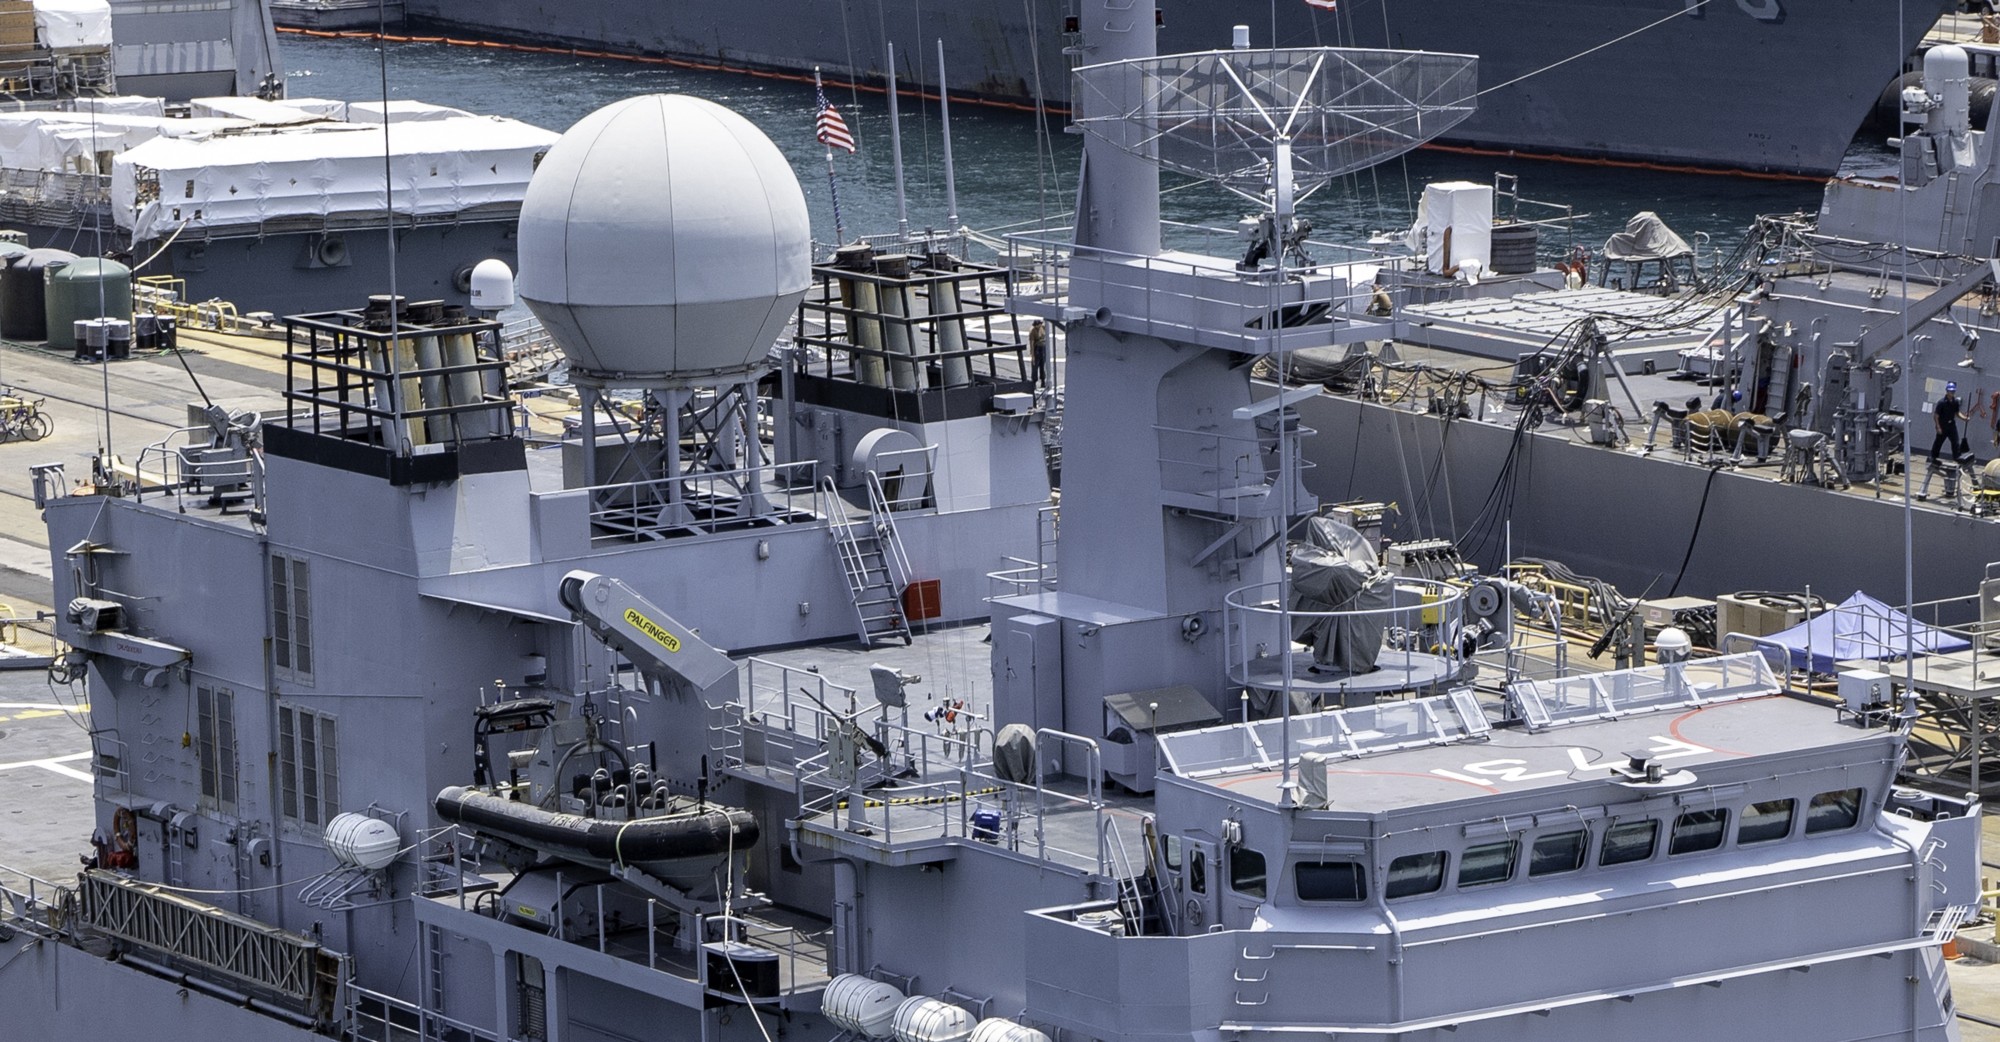 f-731 fs prairial floreal class frigate french navy marine nationale fregate surveillance 12a radar antenna details